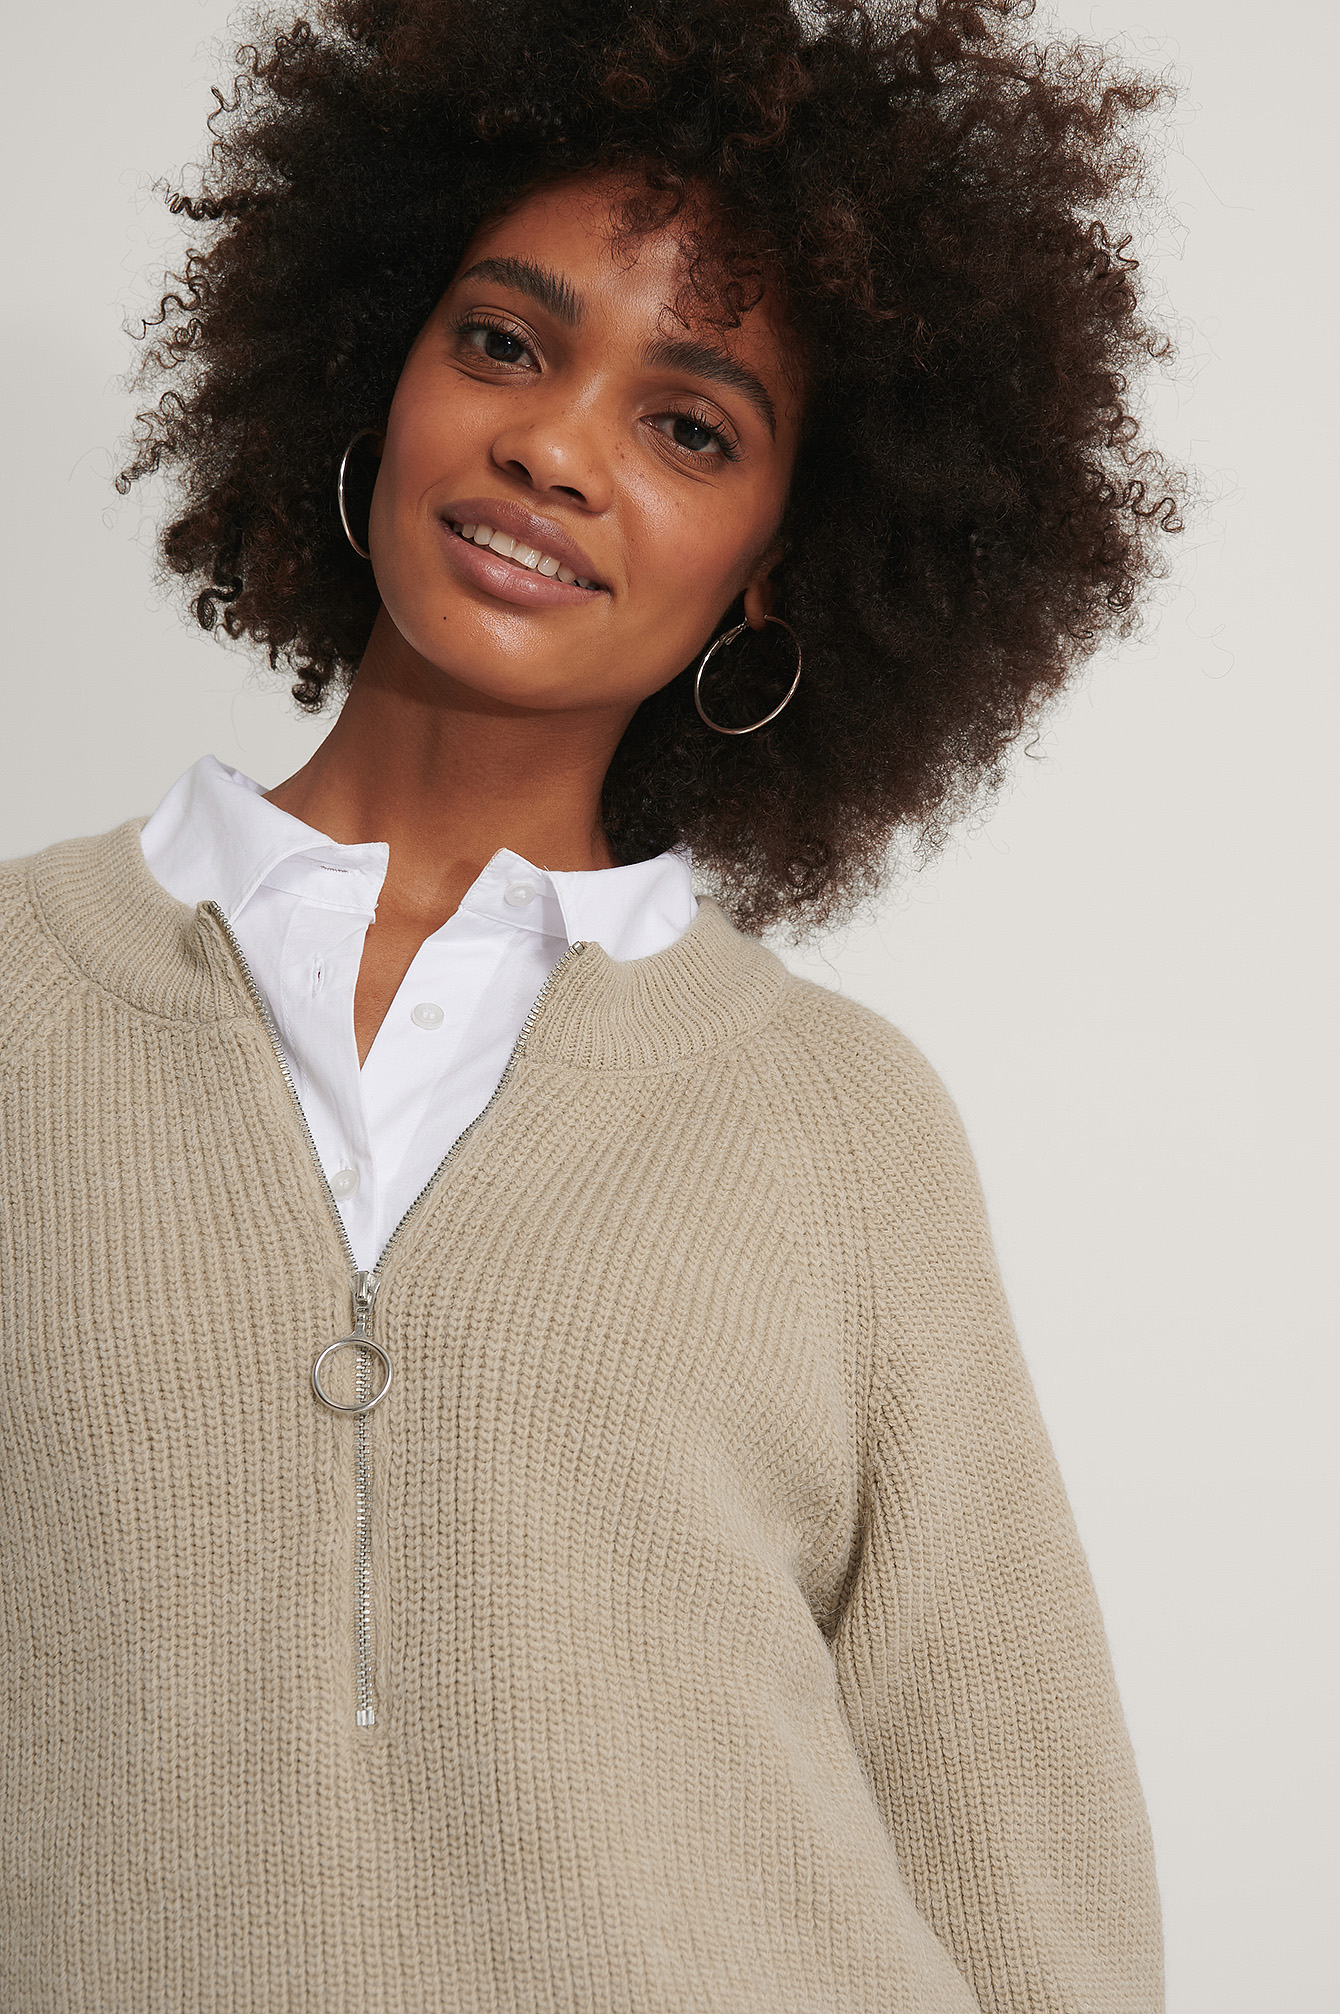 Beige Zipper Front Knitted Sweater